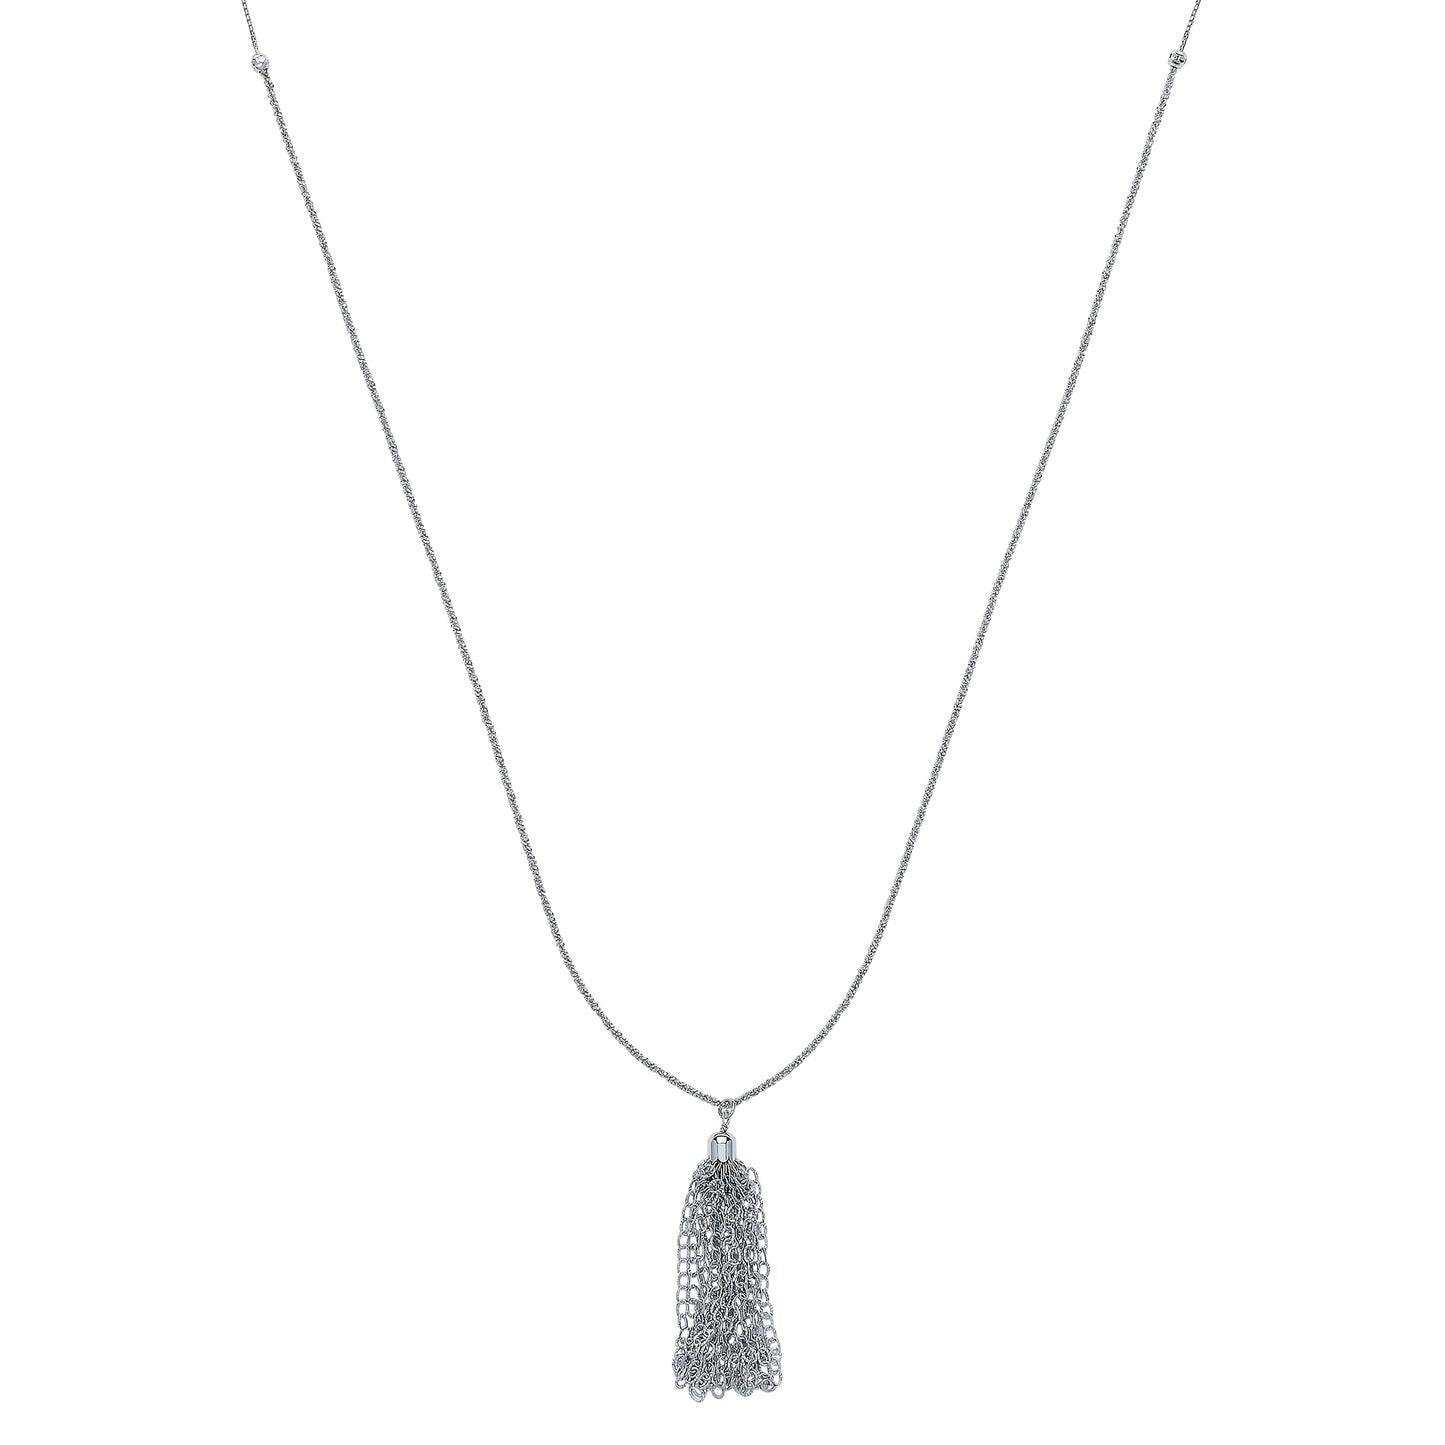 Silver  Waterfall Tassle Drop Necklace 17 inch - GVK179